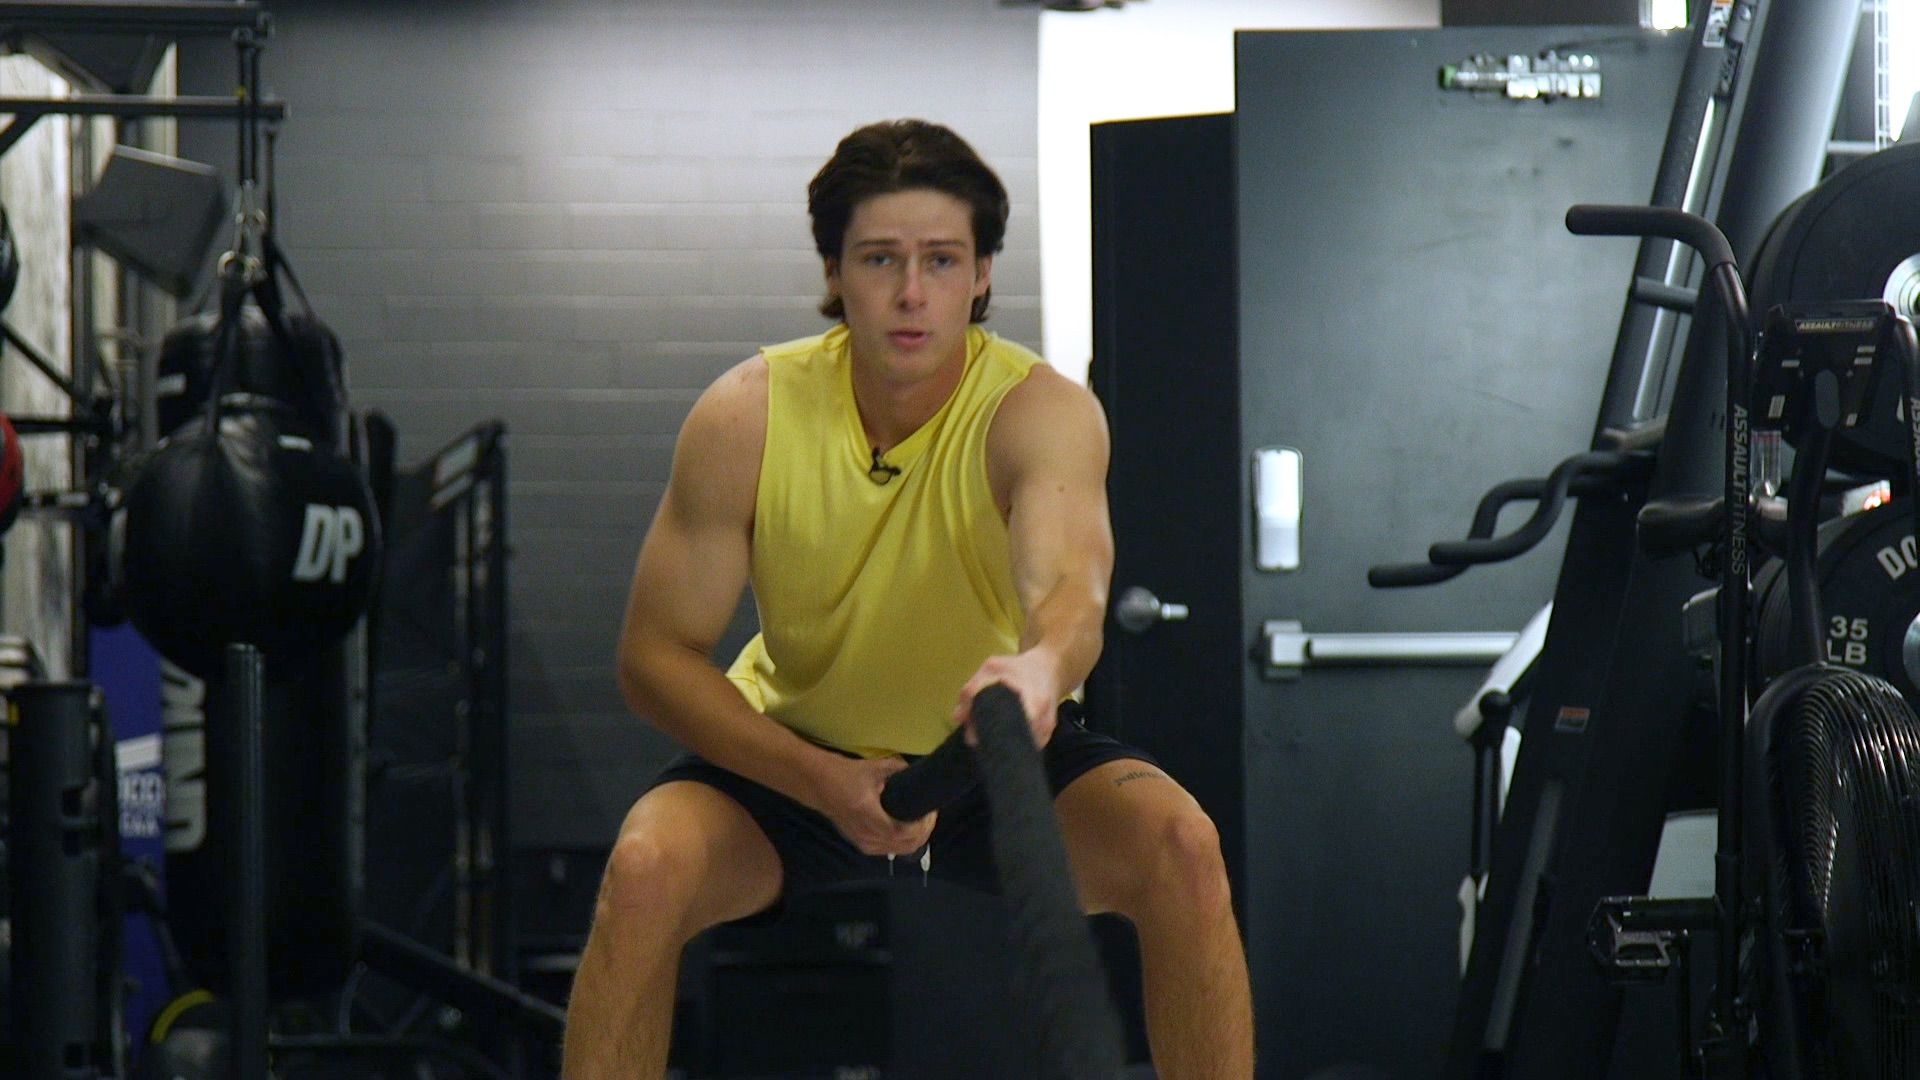 TikTok Star Blake Gray Shows Off His High-Energy Workout